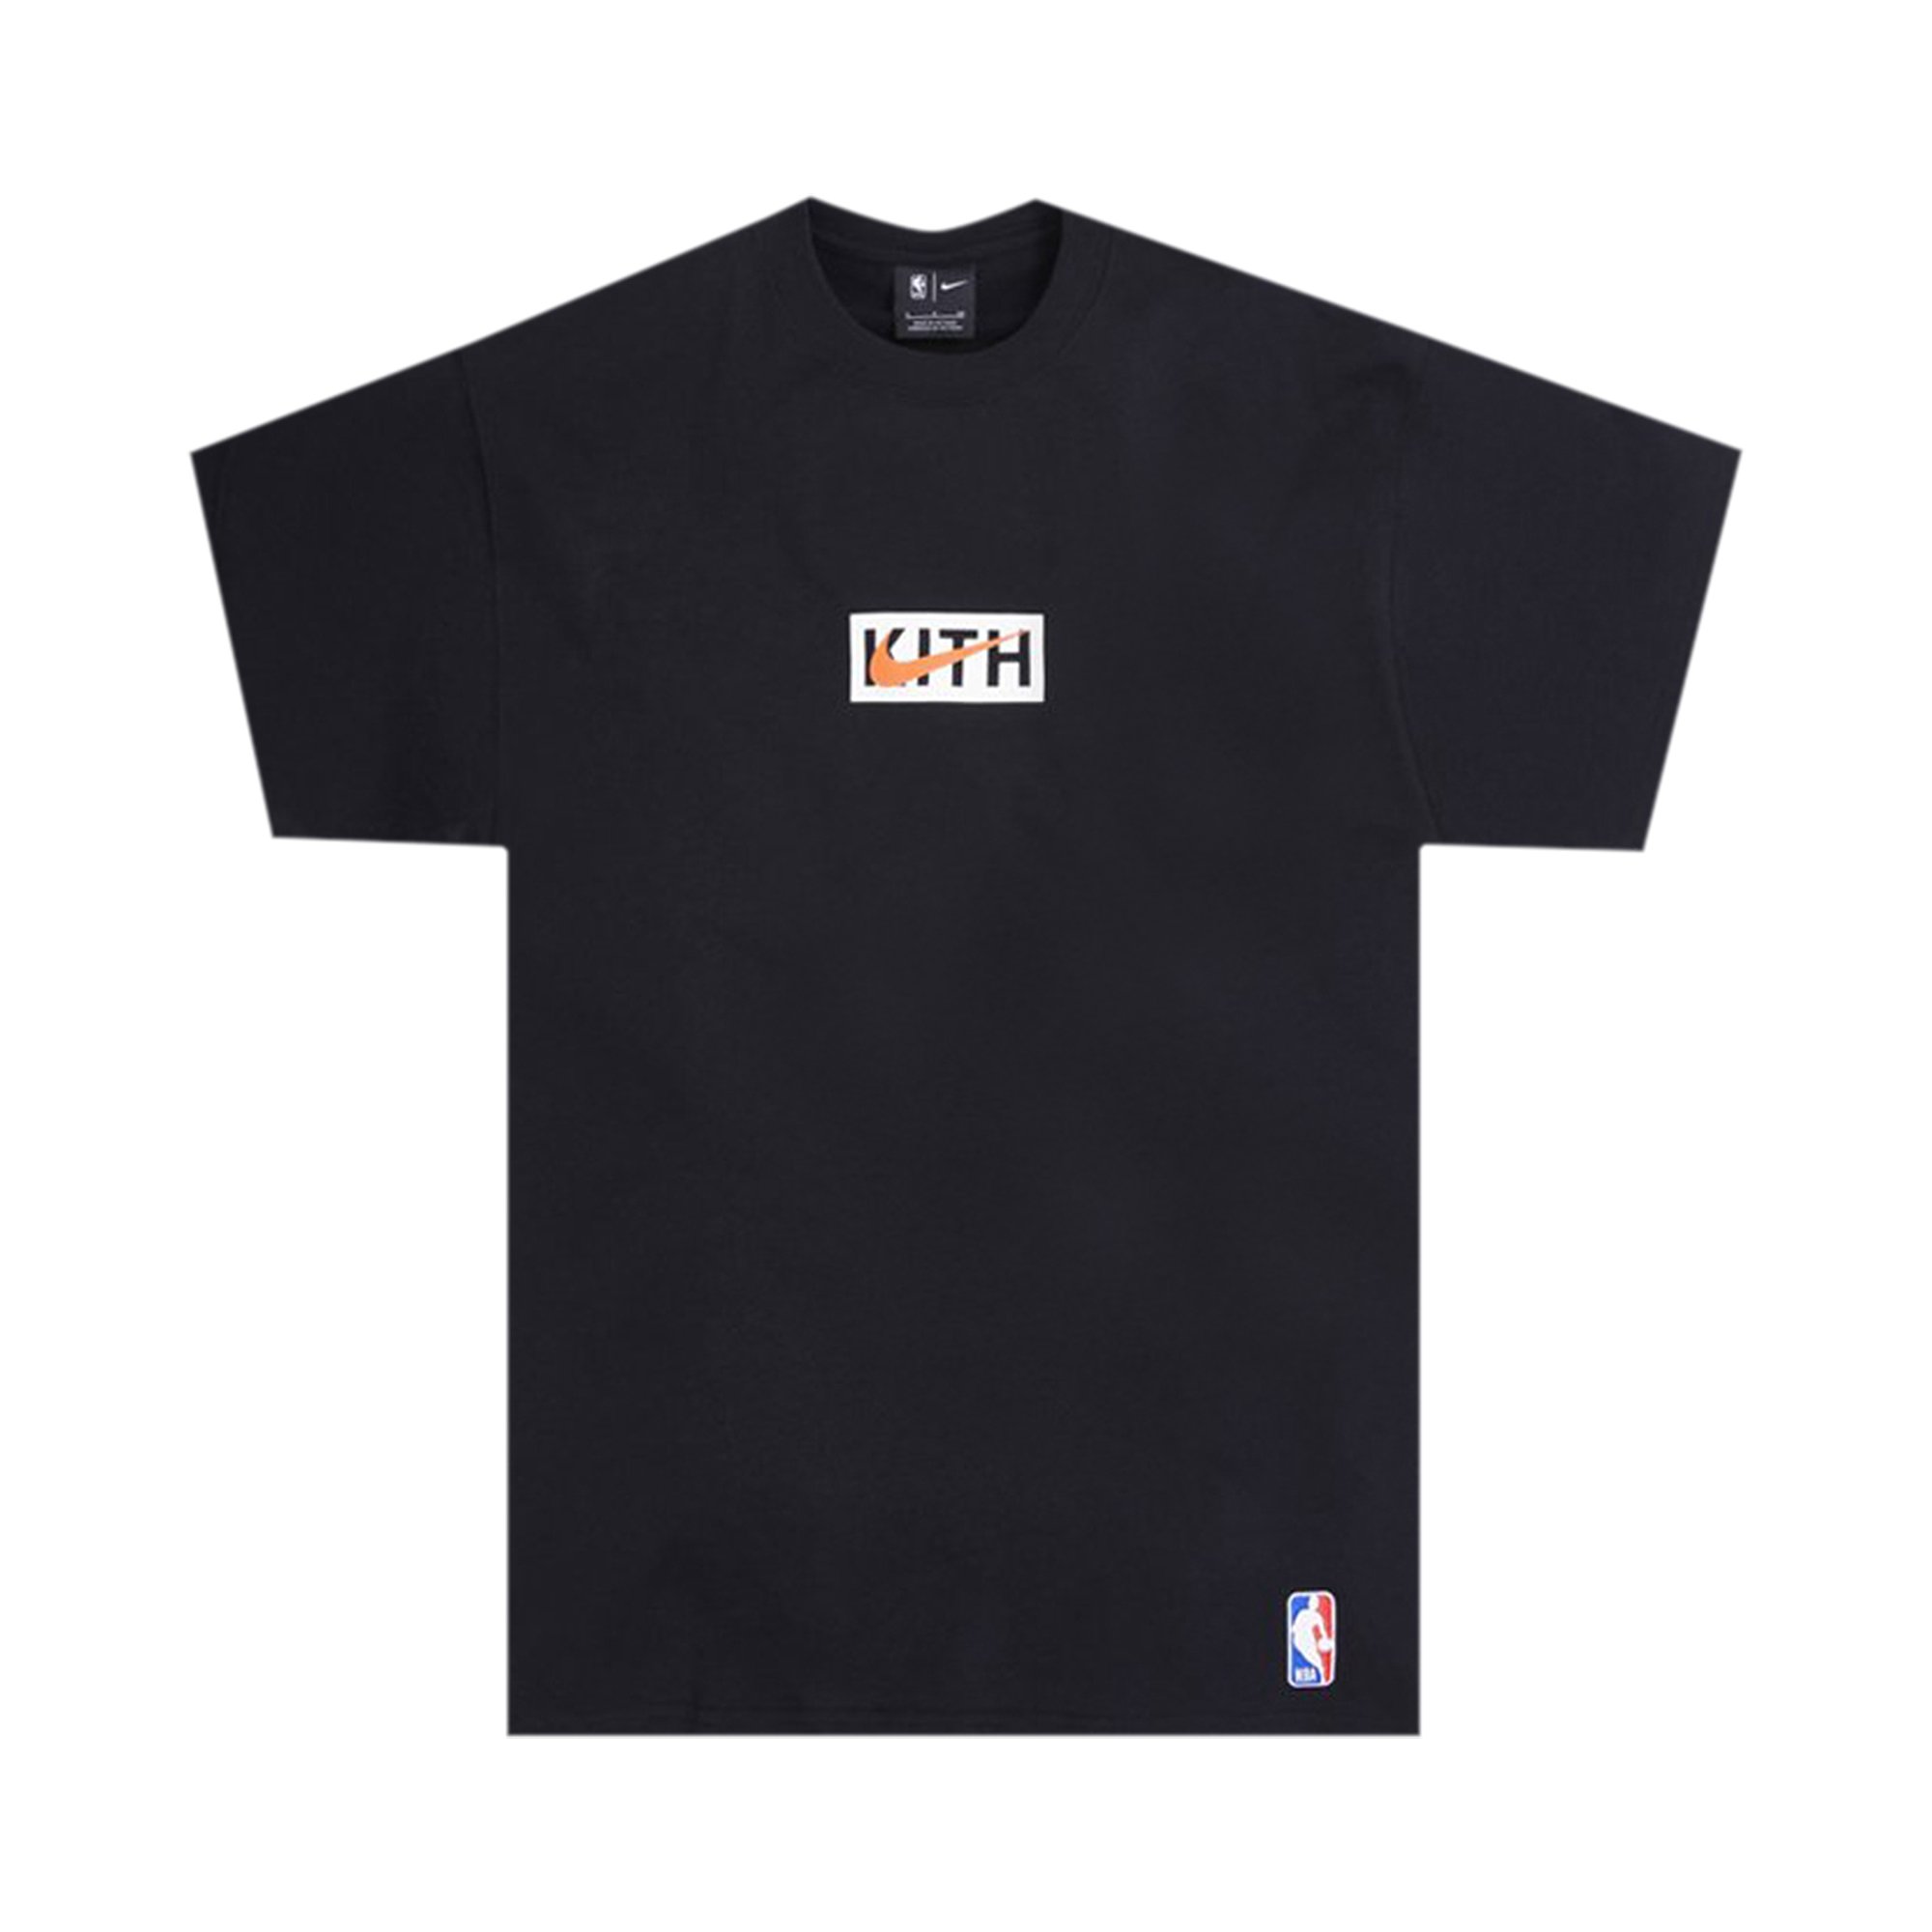 Kith x Nike for New York Knicks Tee 'Black'